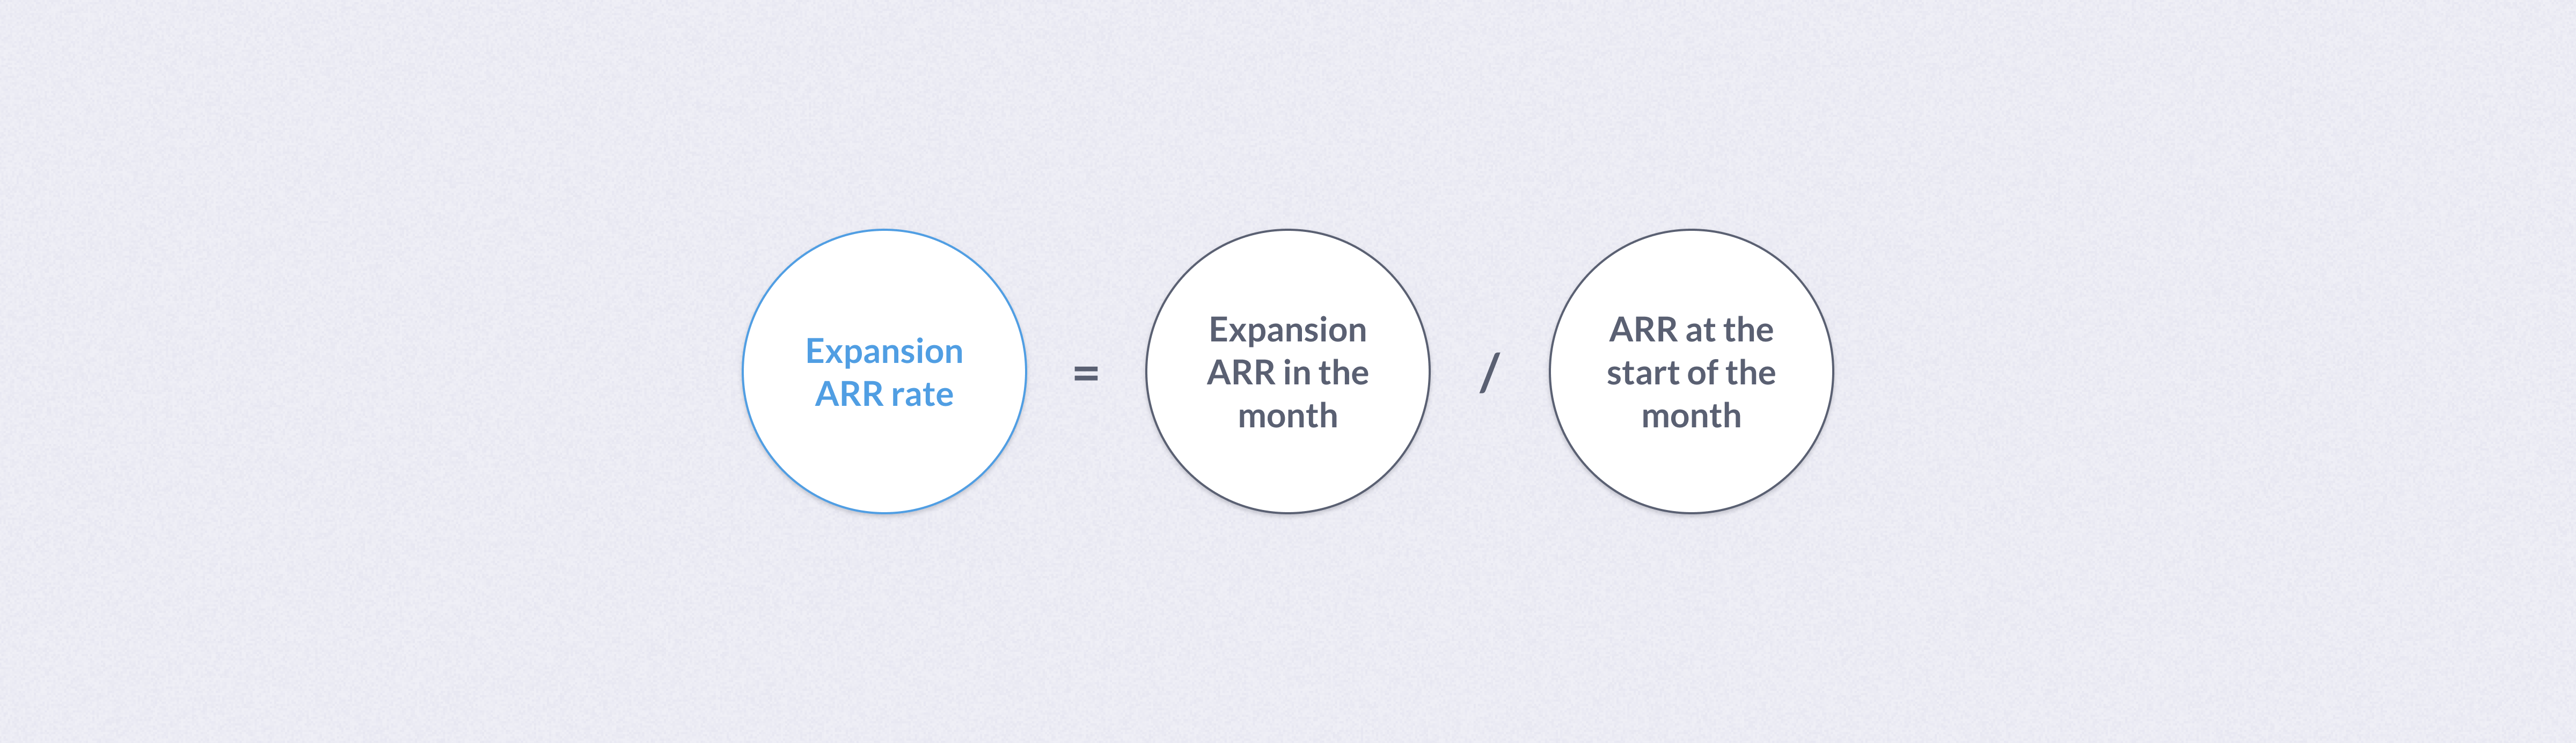 Expansion ARR rate